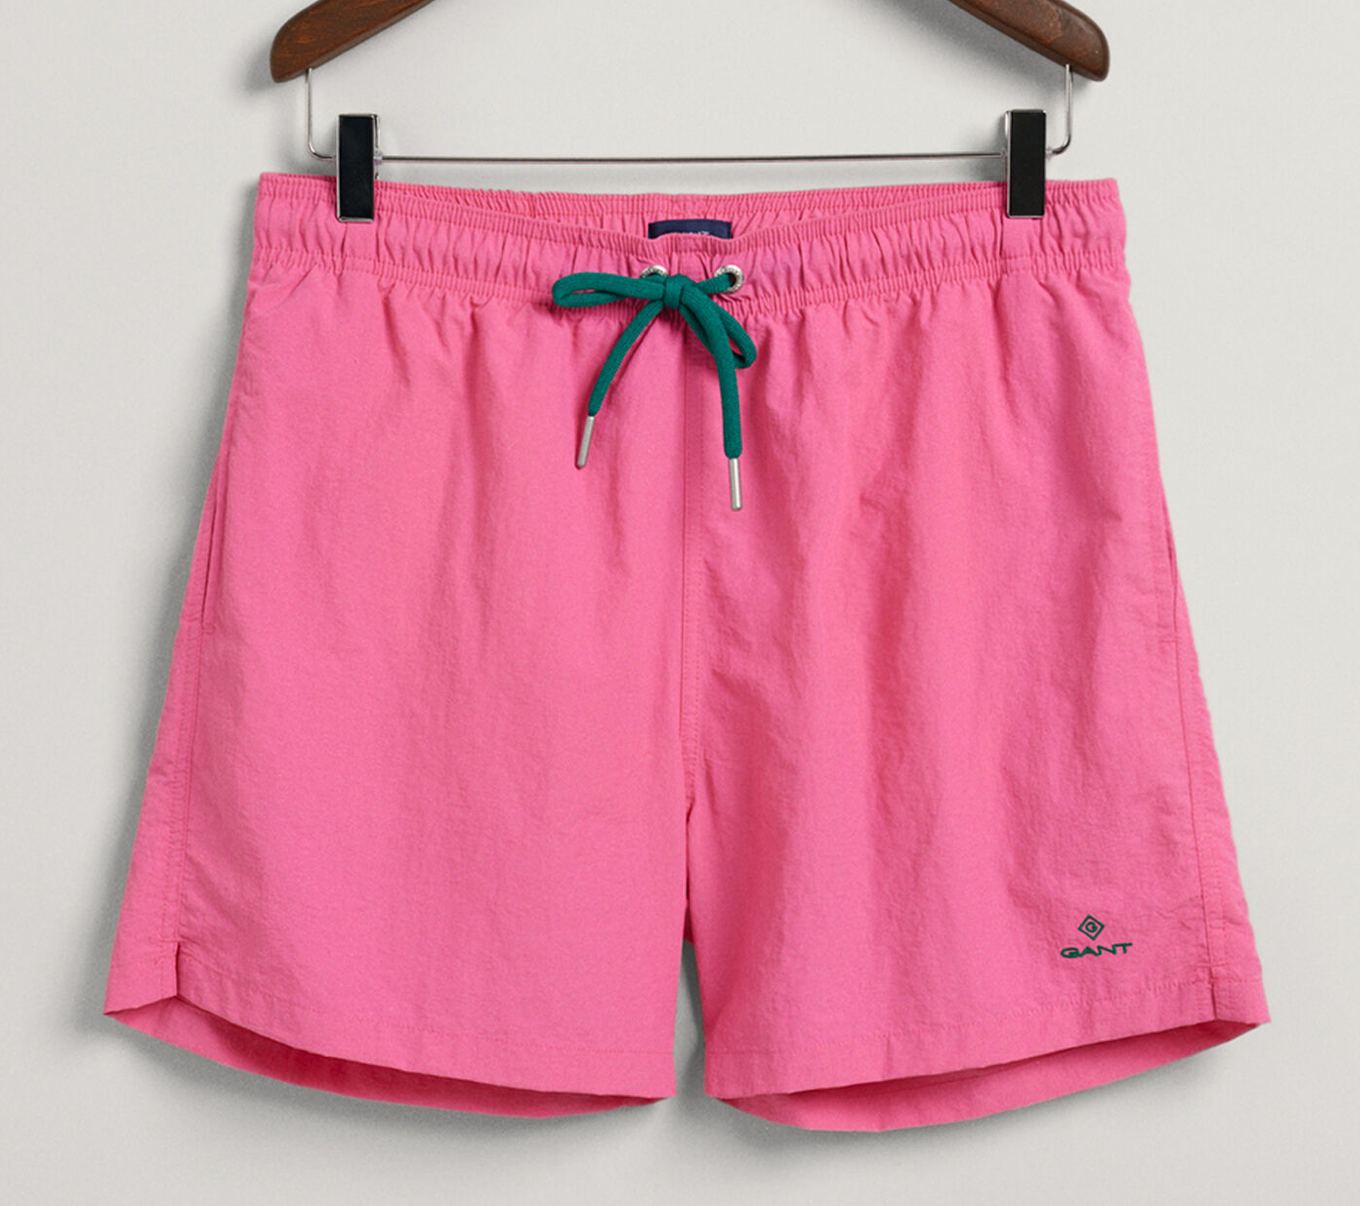 Gant "Classic" Swim Shorts Perky Pink